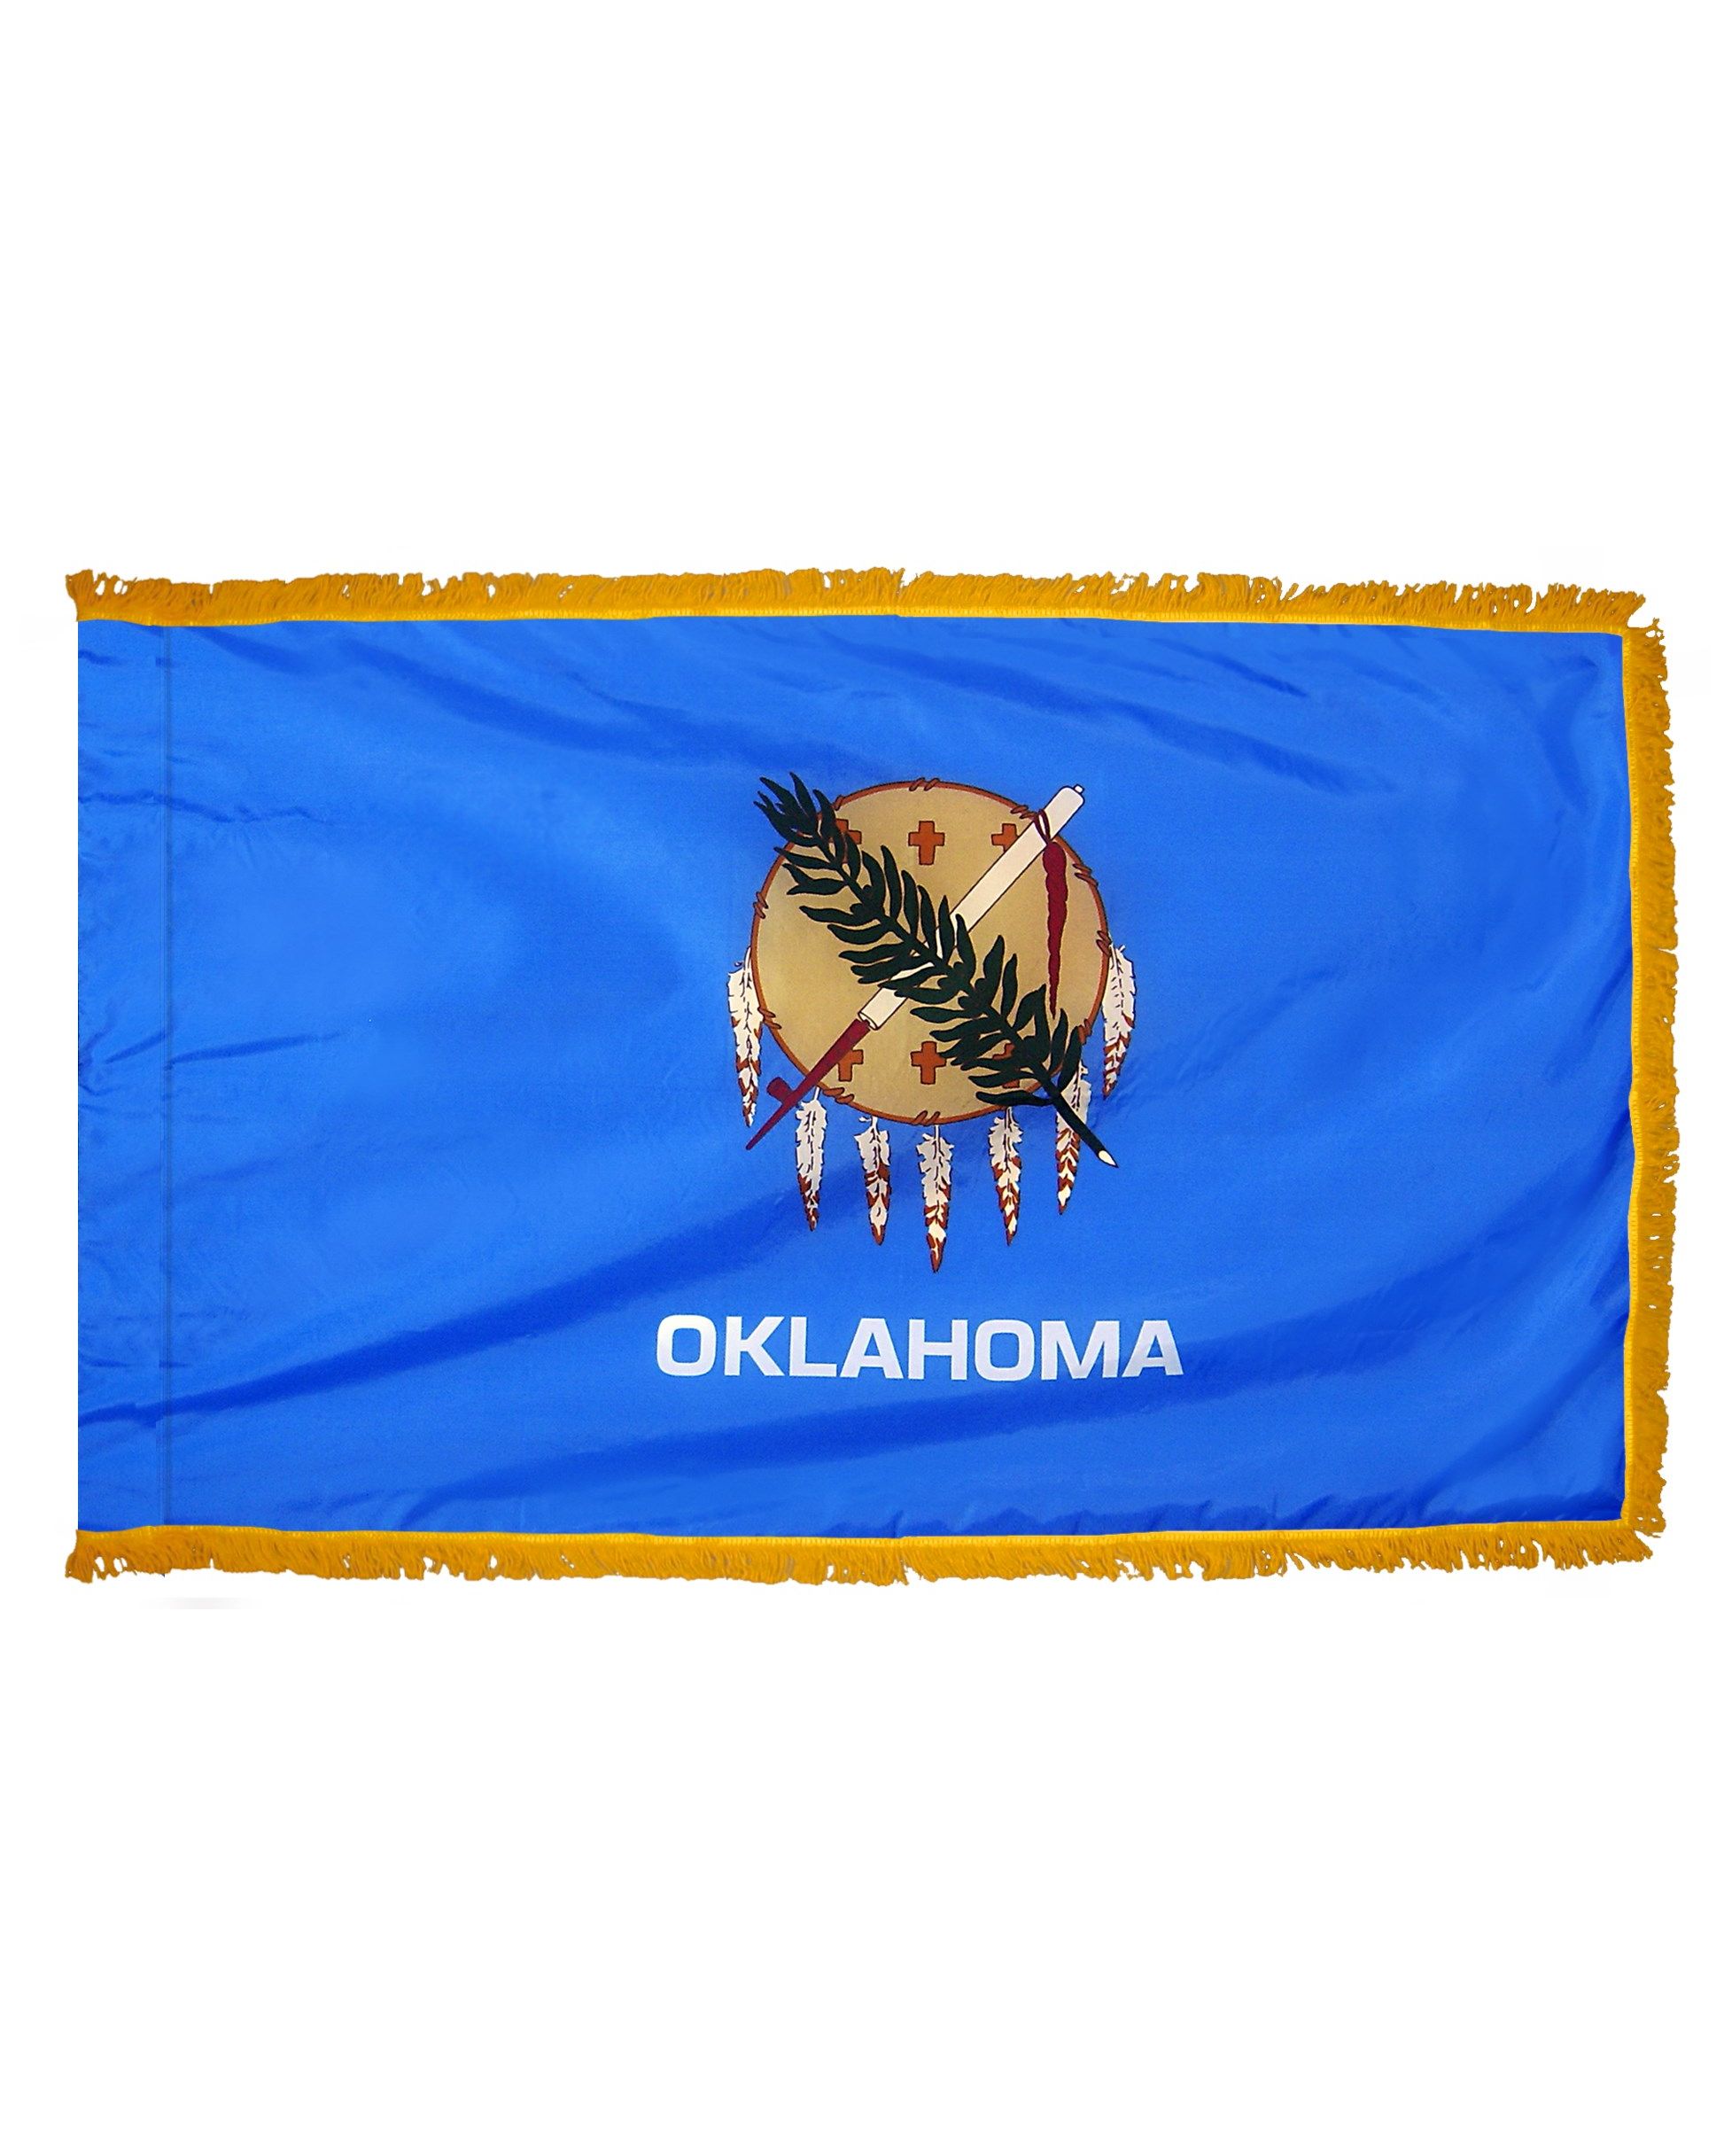 Download Oklahoma Flag 3 x 5 ft. Indoor Display Flag with Gold Fringe